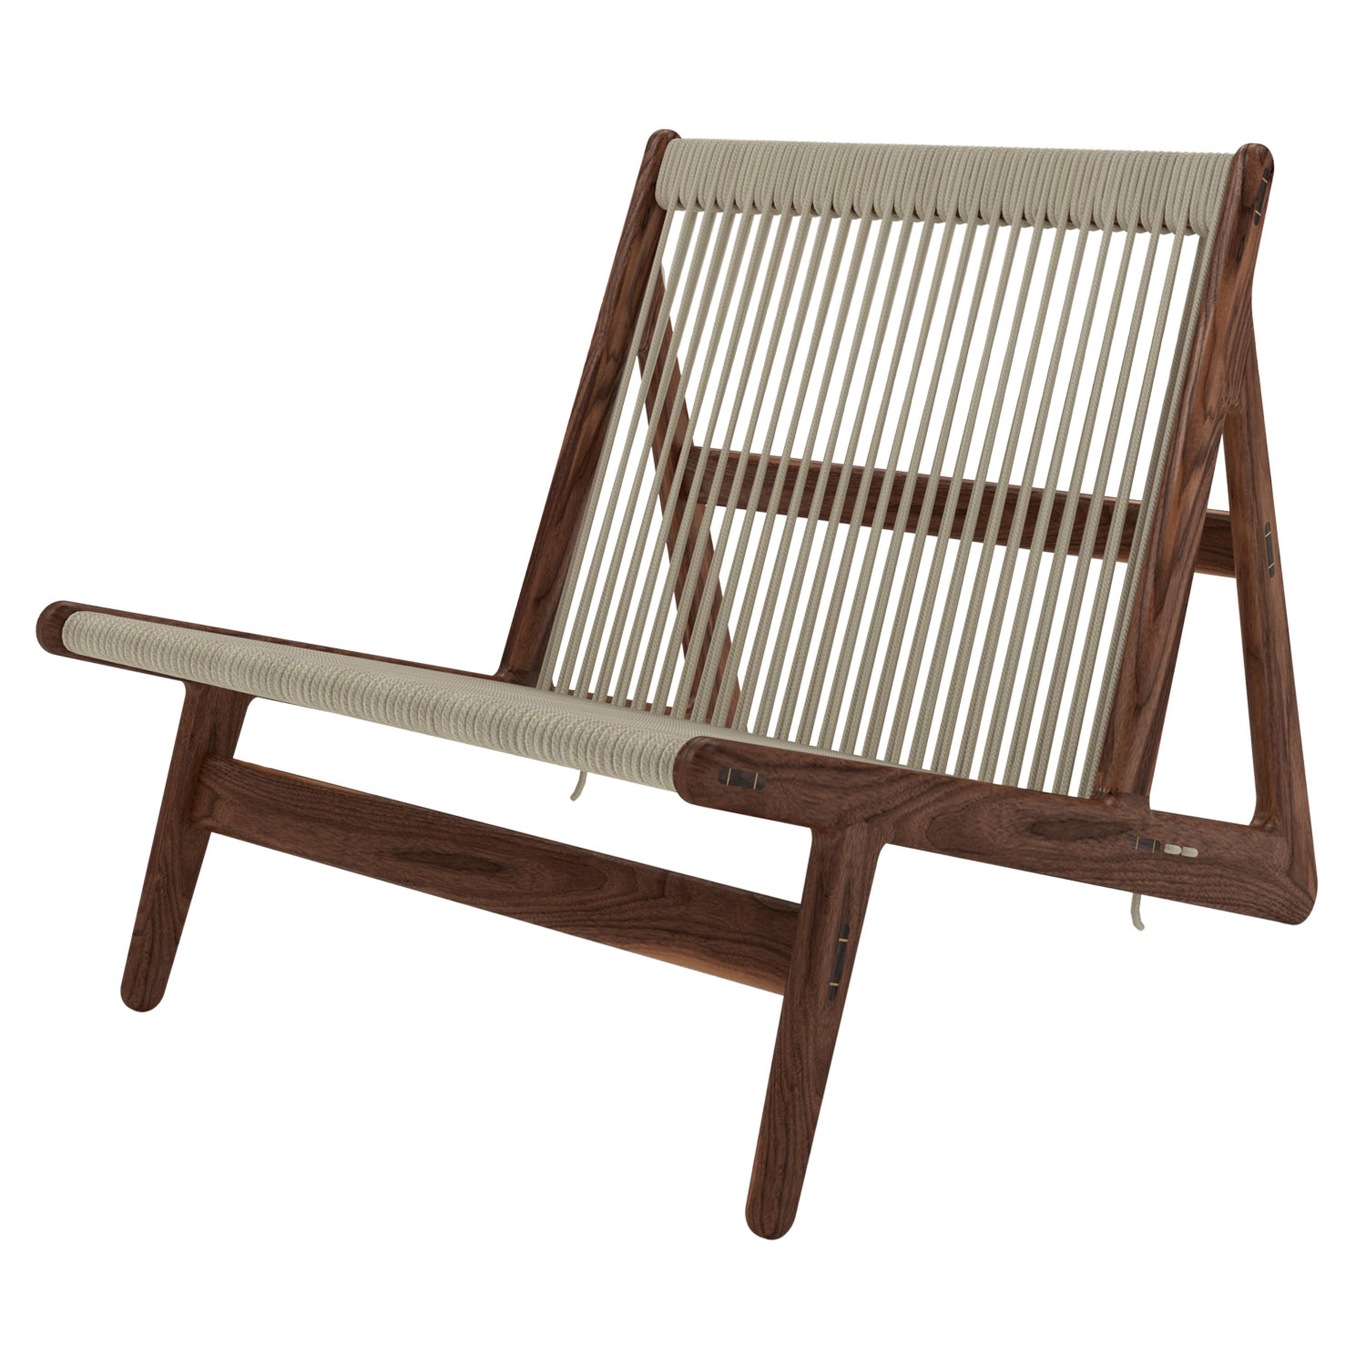 MR01 Initial Chair, Oiled American Walnut